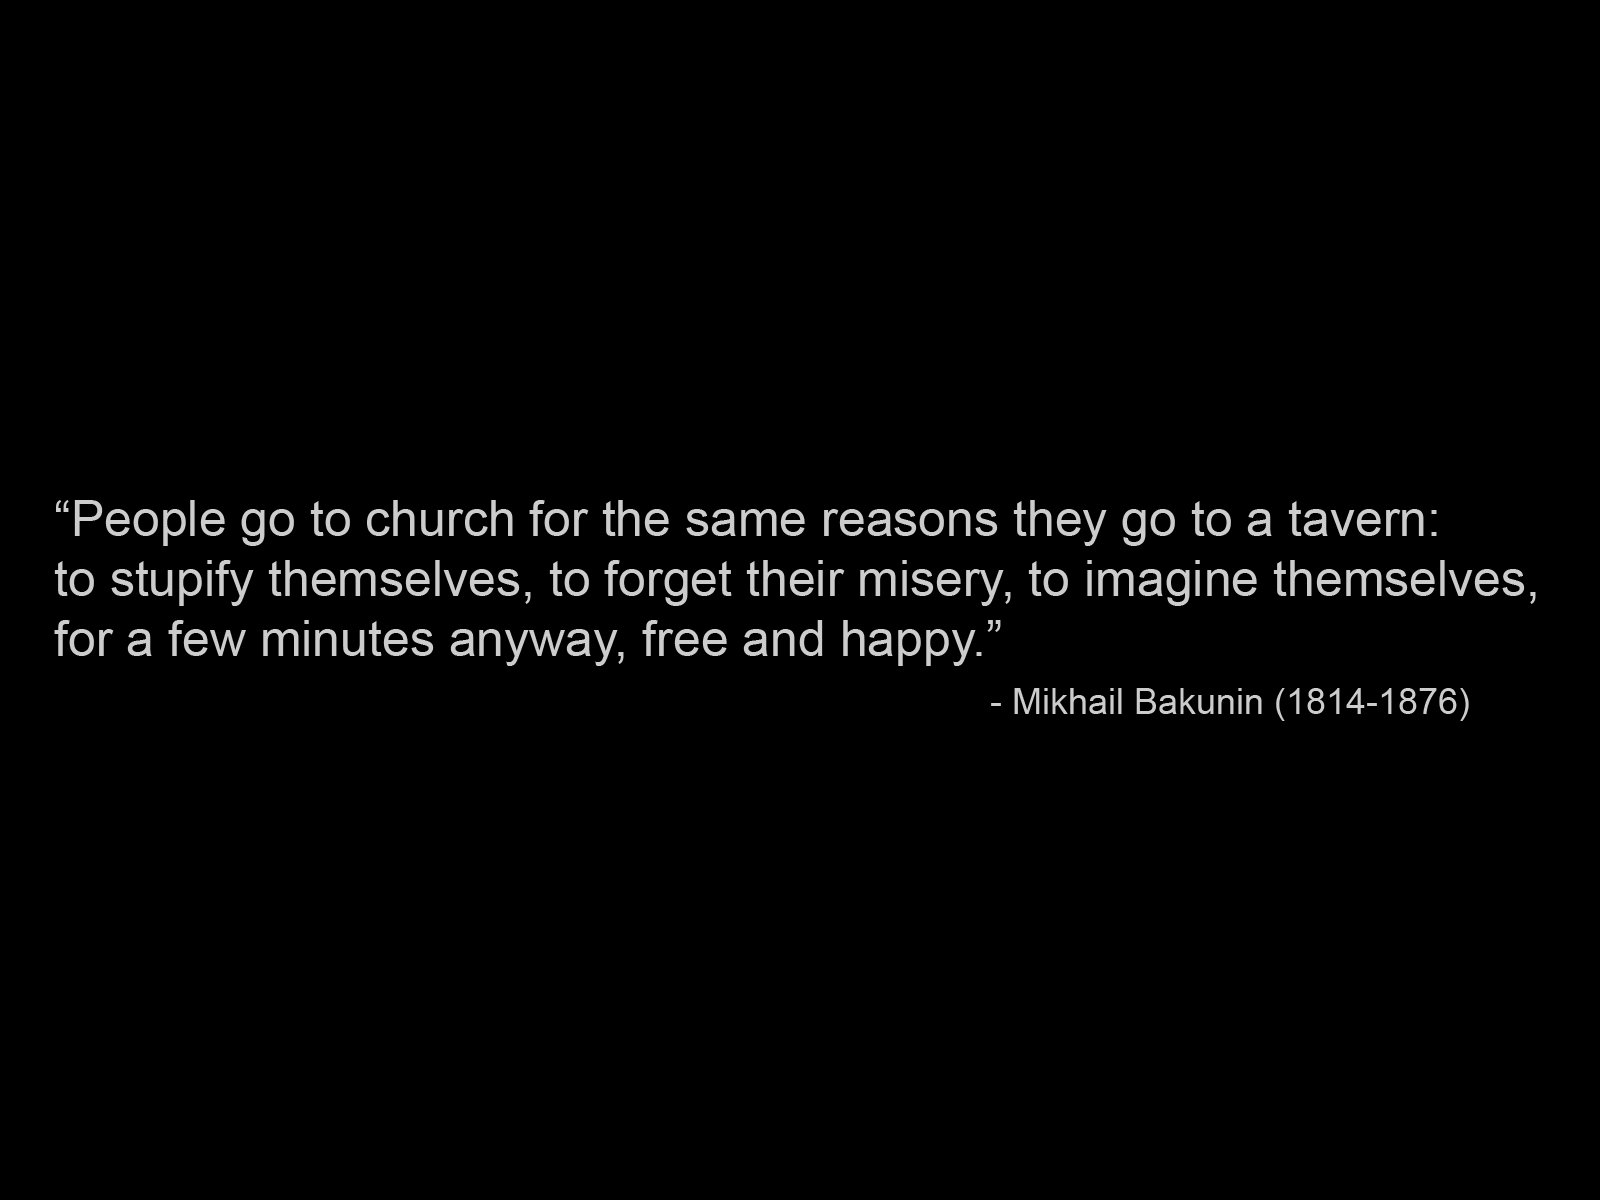 Mikhail Bakunin's quote #6